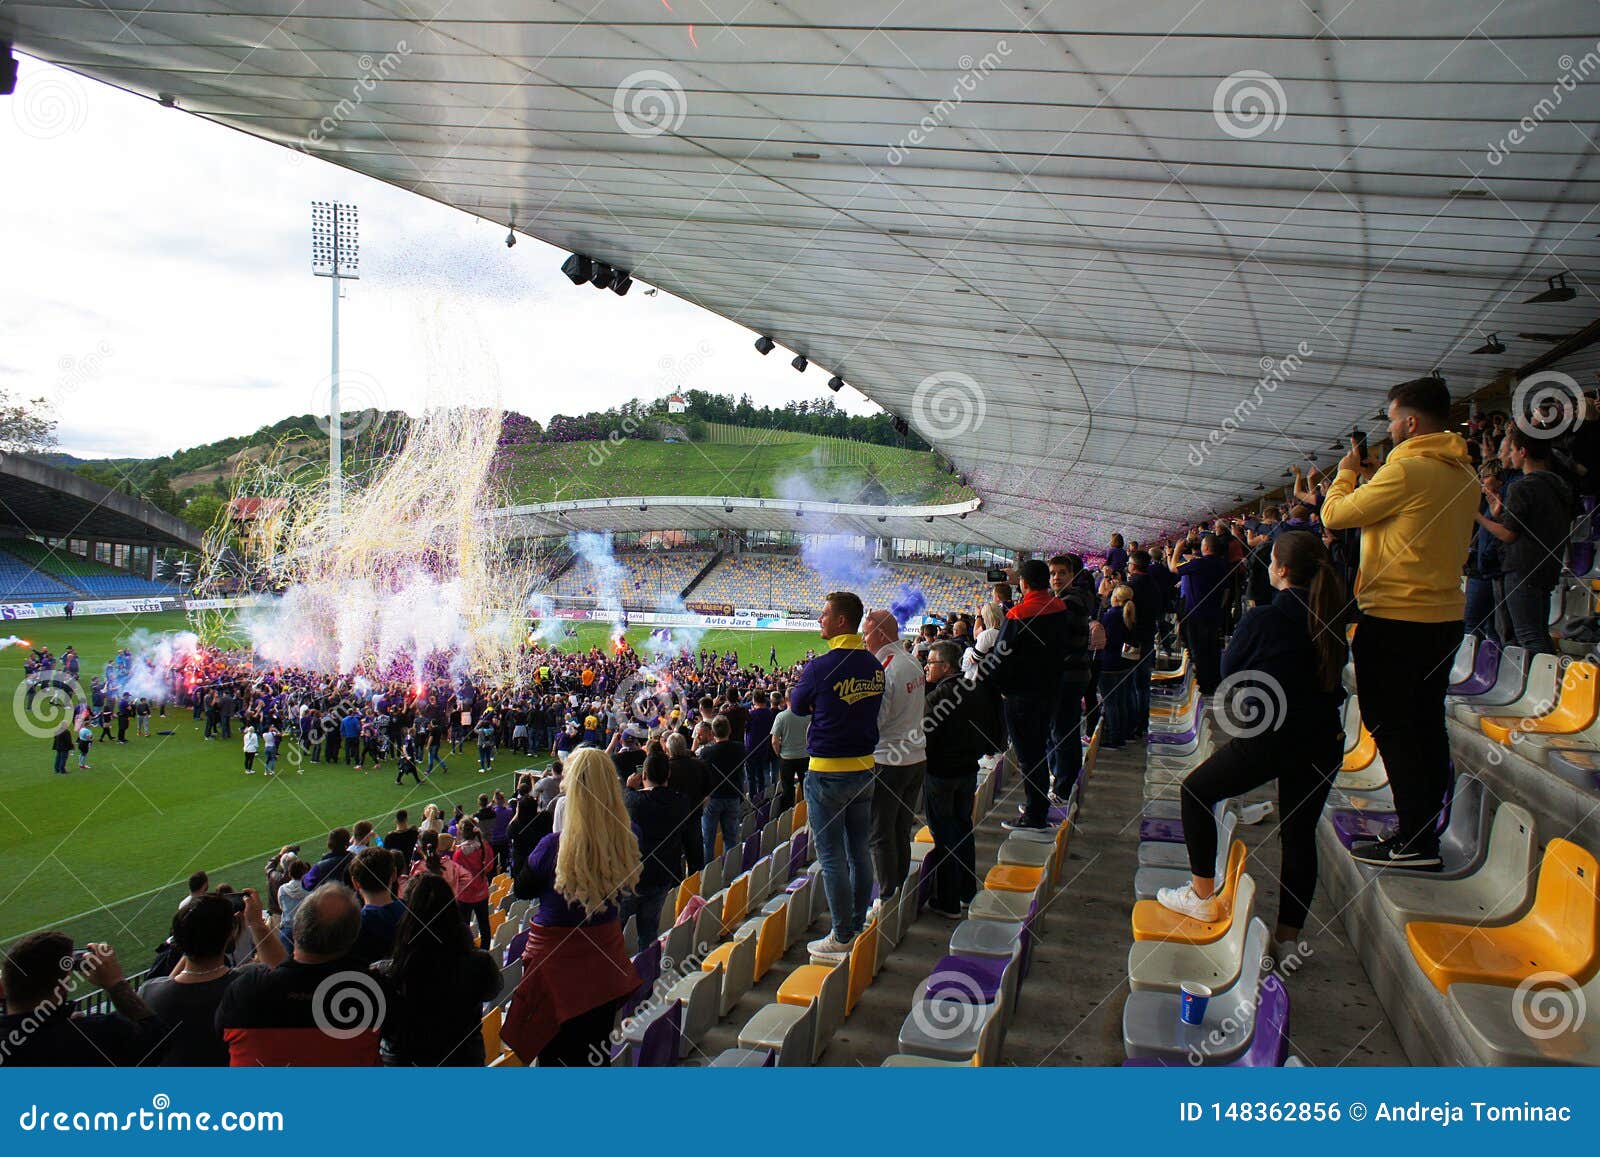 Club Maribor Stock Photos - Free & Royalty-Free Stock Photos from Dreamstime